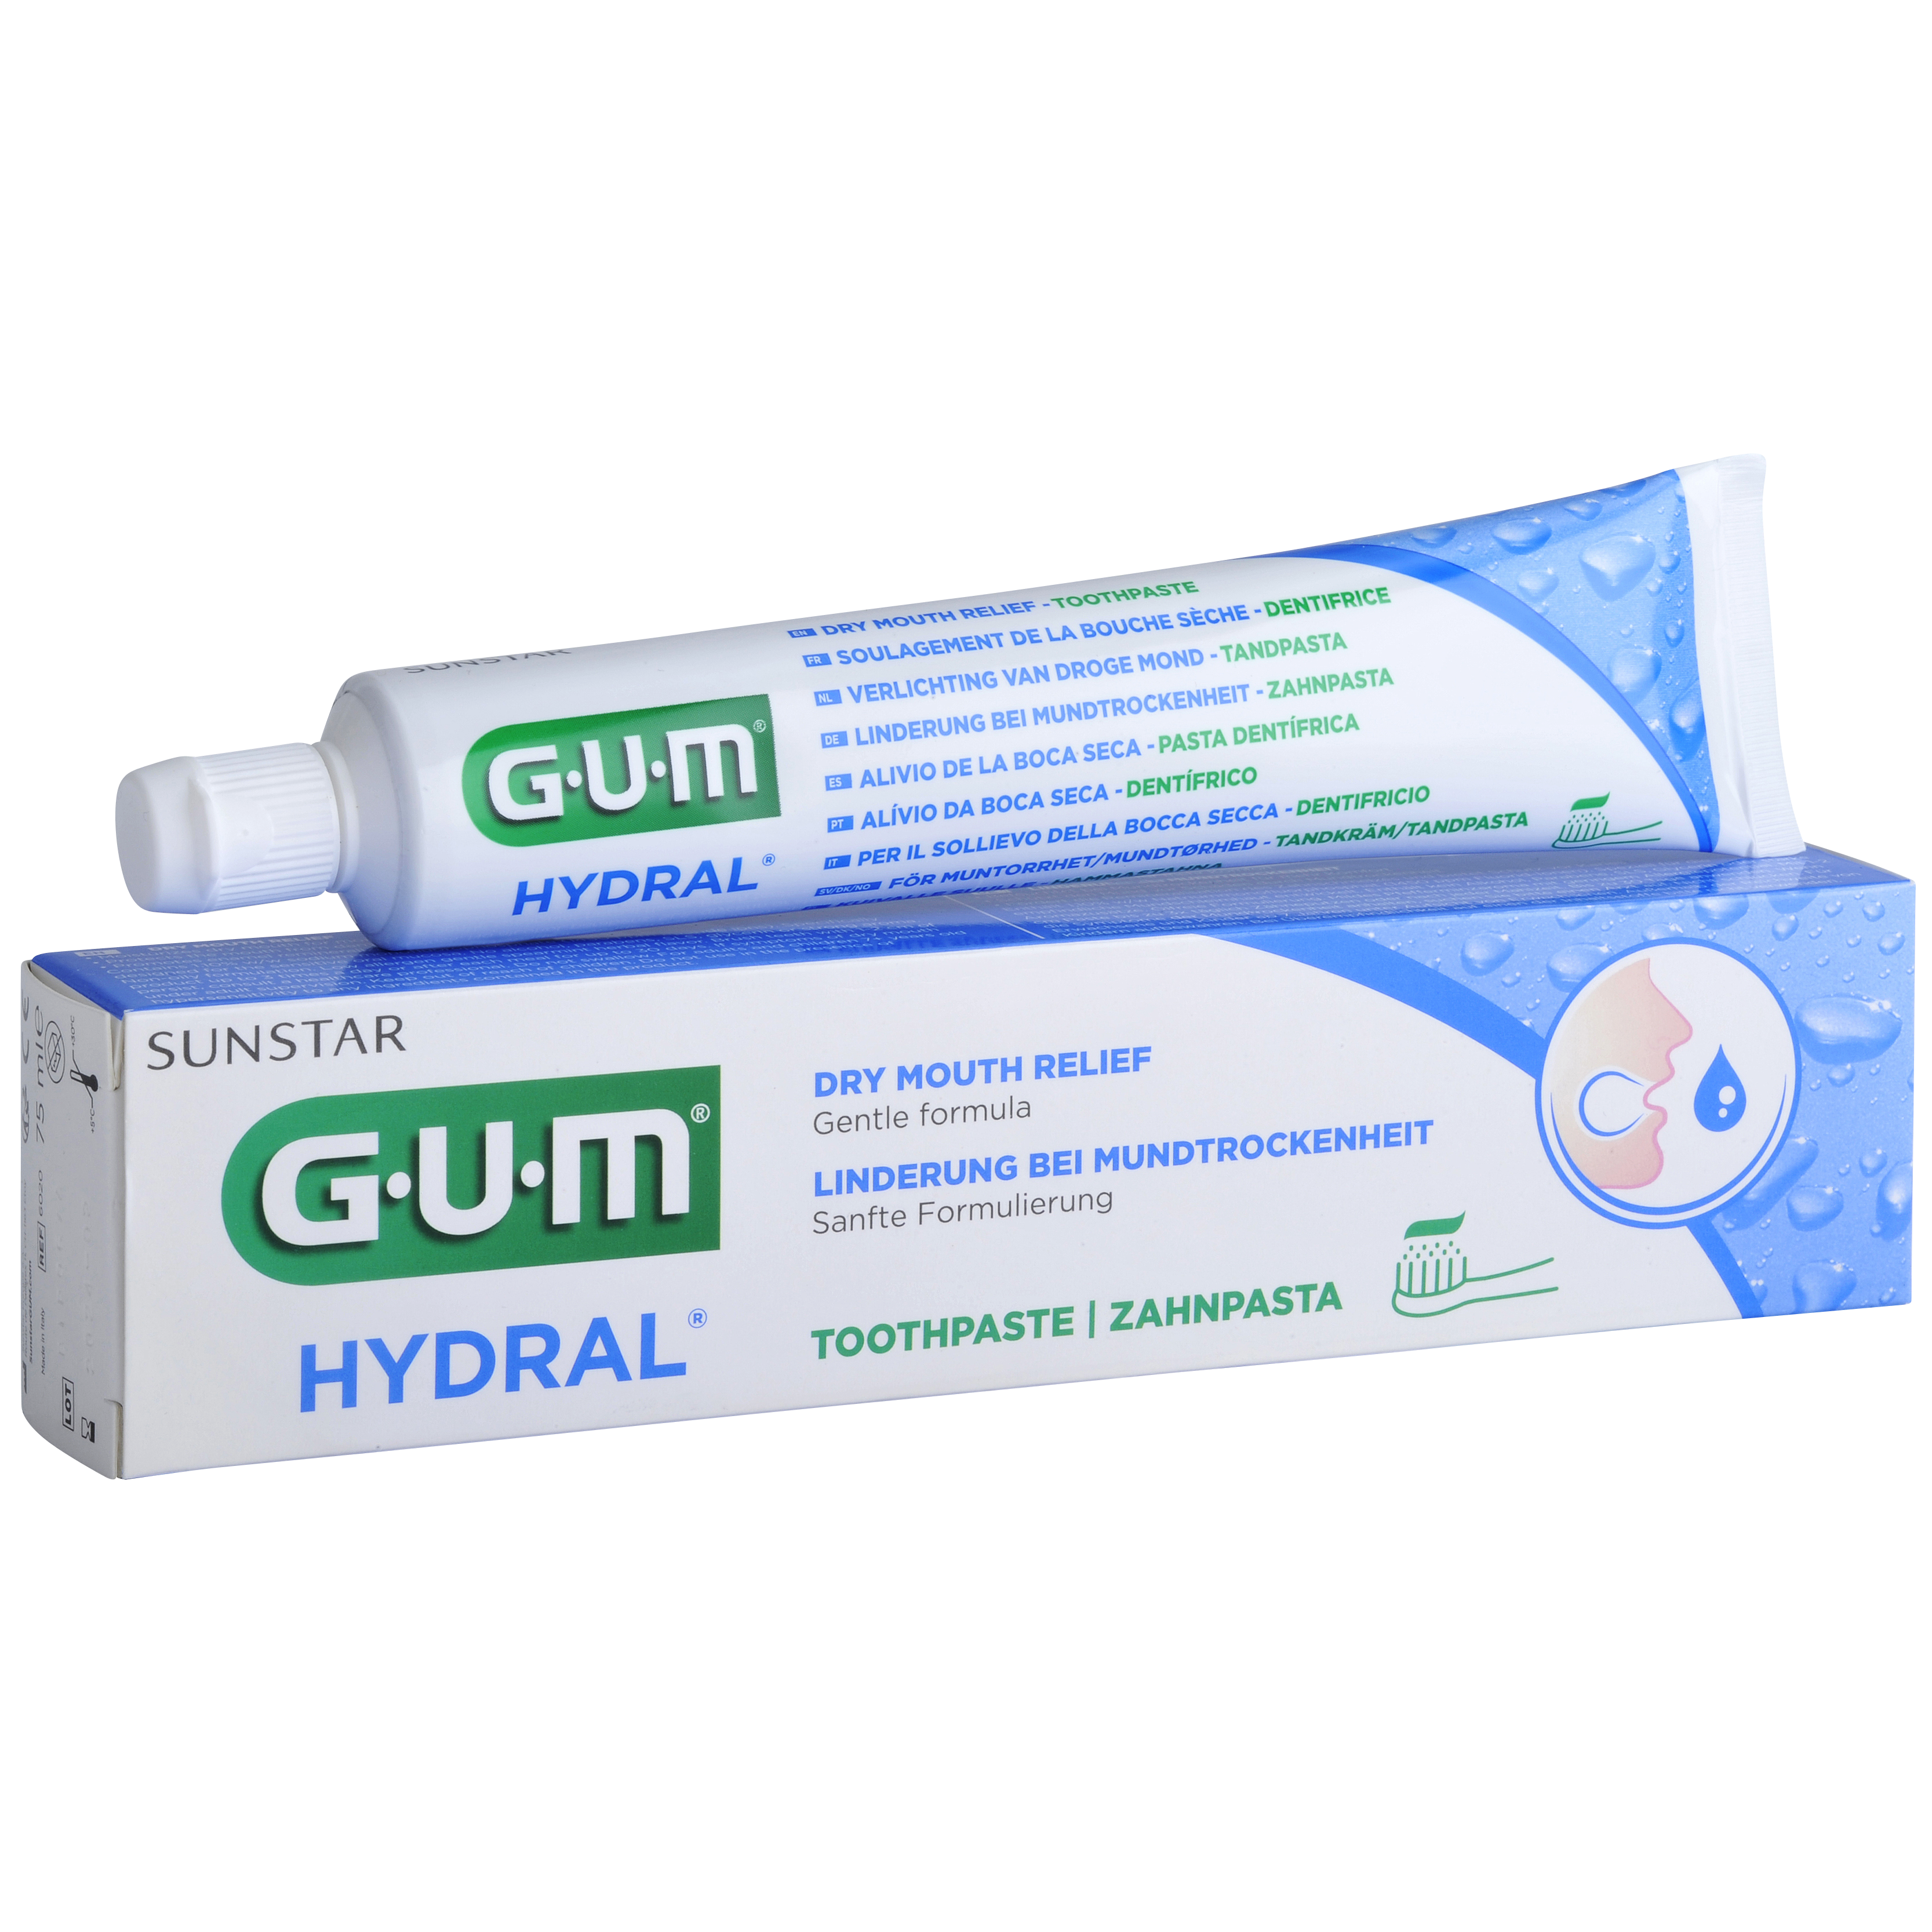 P6020-DE-EN-GUM-HYDRAL-Toothpaste-75ml-Box-Tube